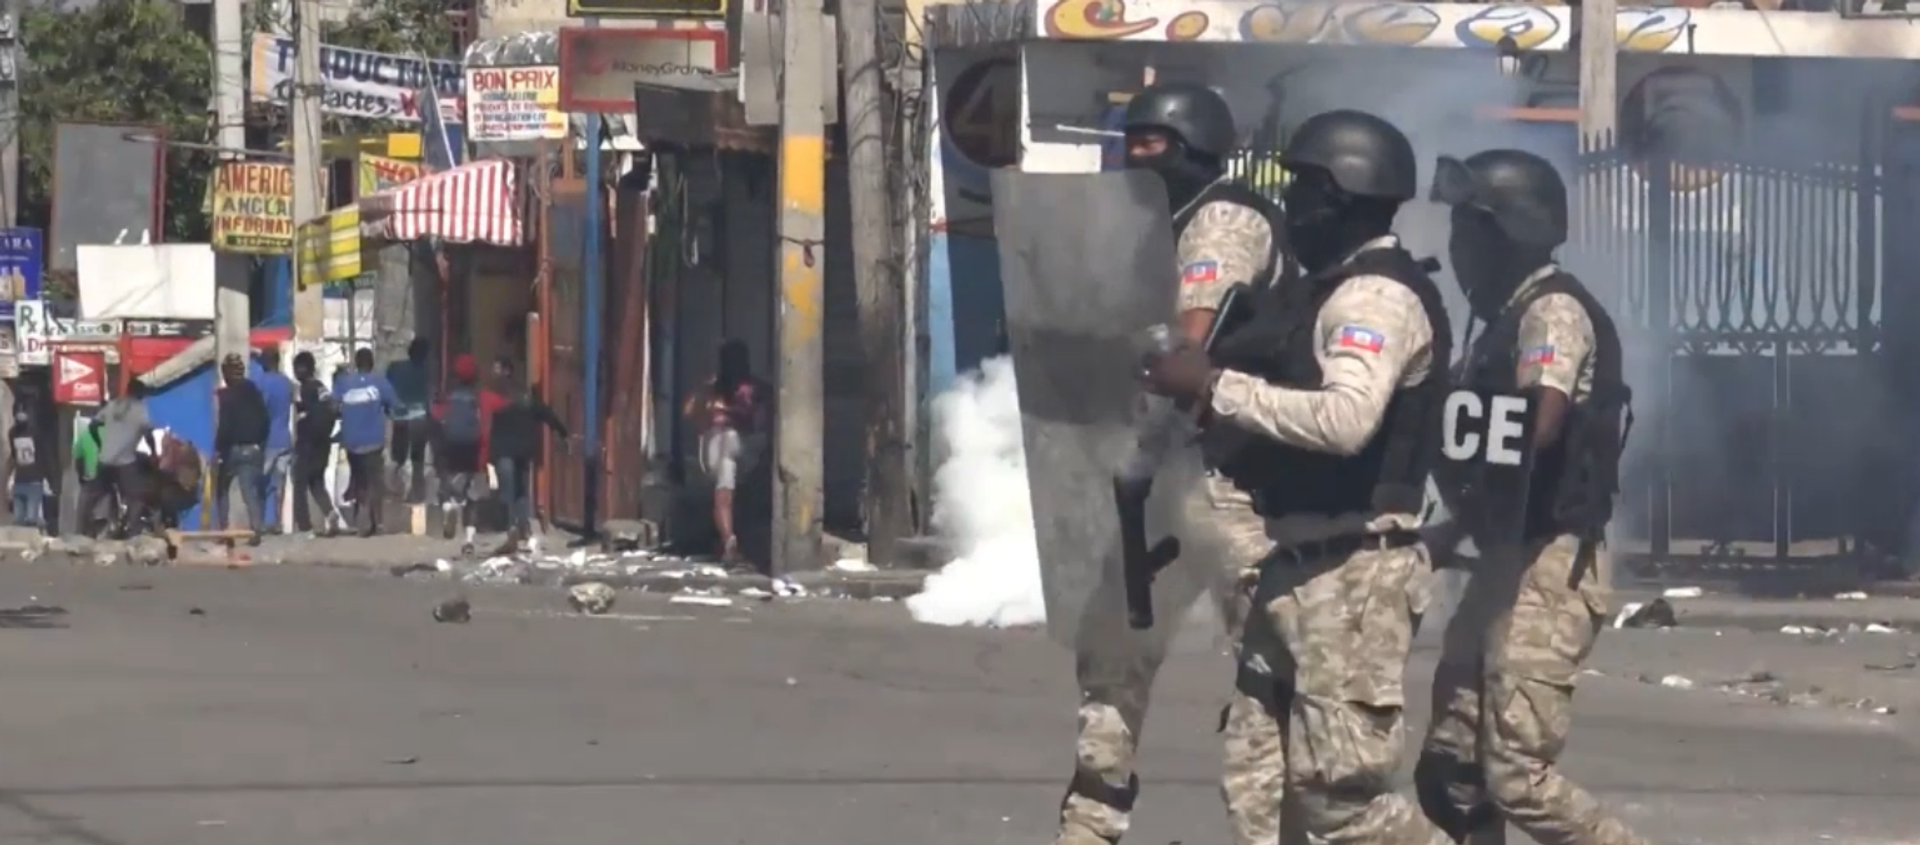 Haití vive una ola de protestas tras el fallido golpe de Estado - Sputnik Mundo, 1920, 08.02.2021